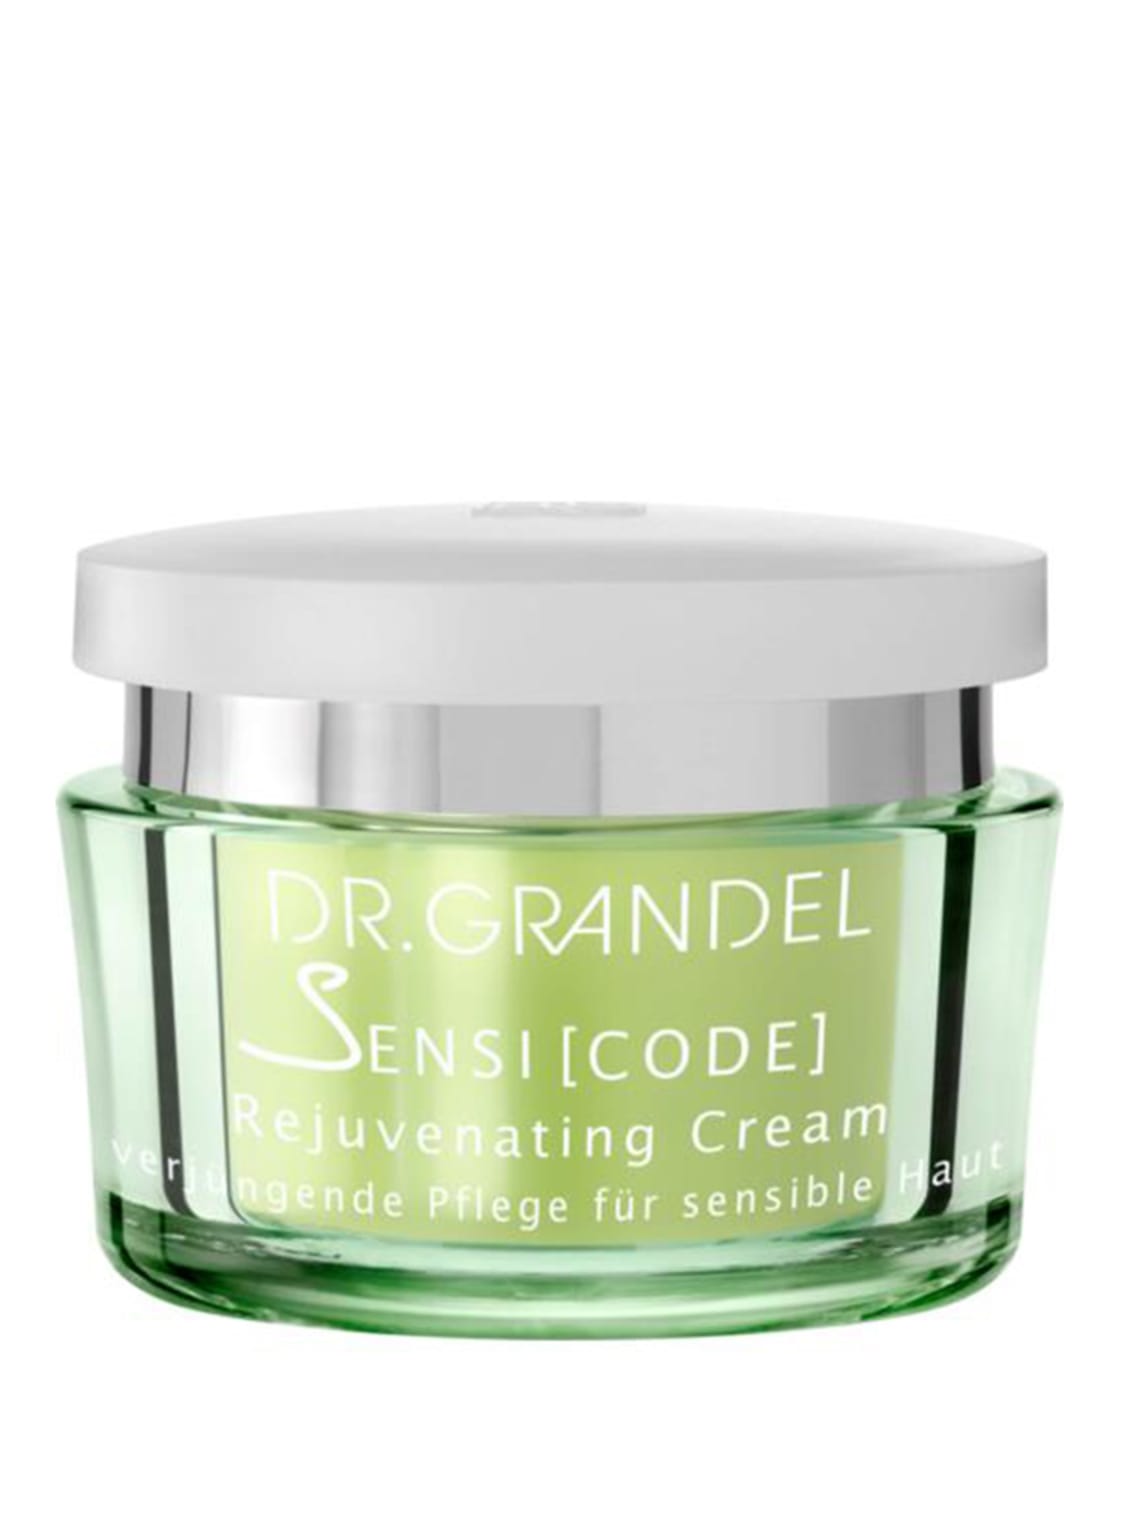 Dr. Grandel Sensicode - Rejuvenating Cream Gesichtscreme für sensible Haut 50 ml von DR. GRANDEL